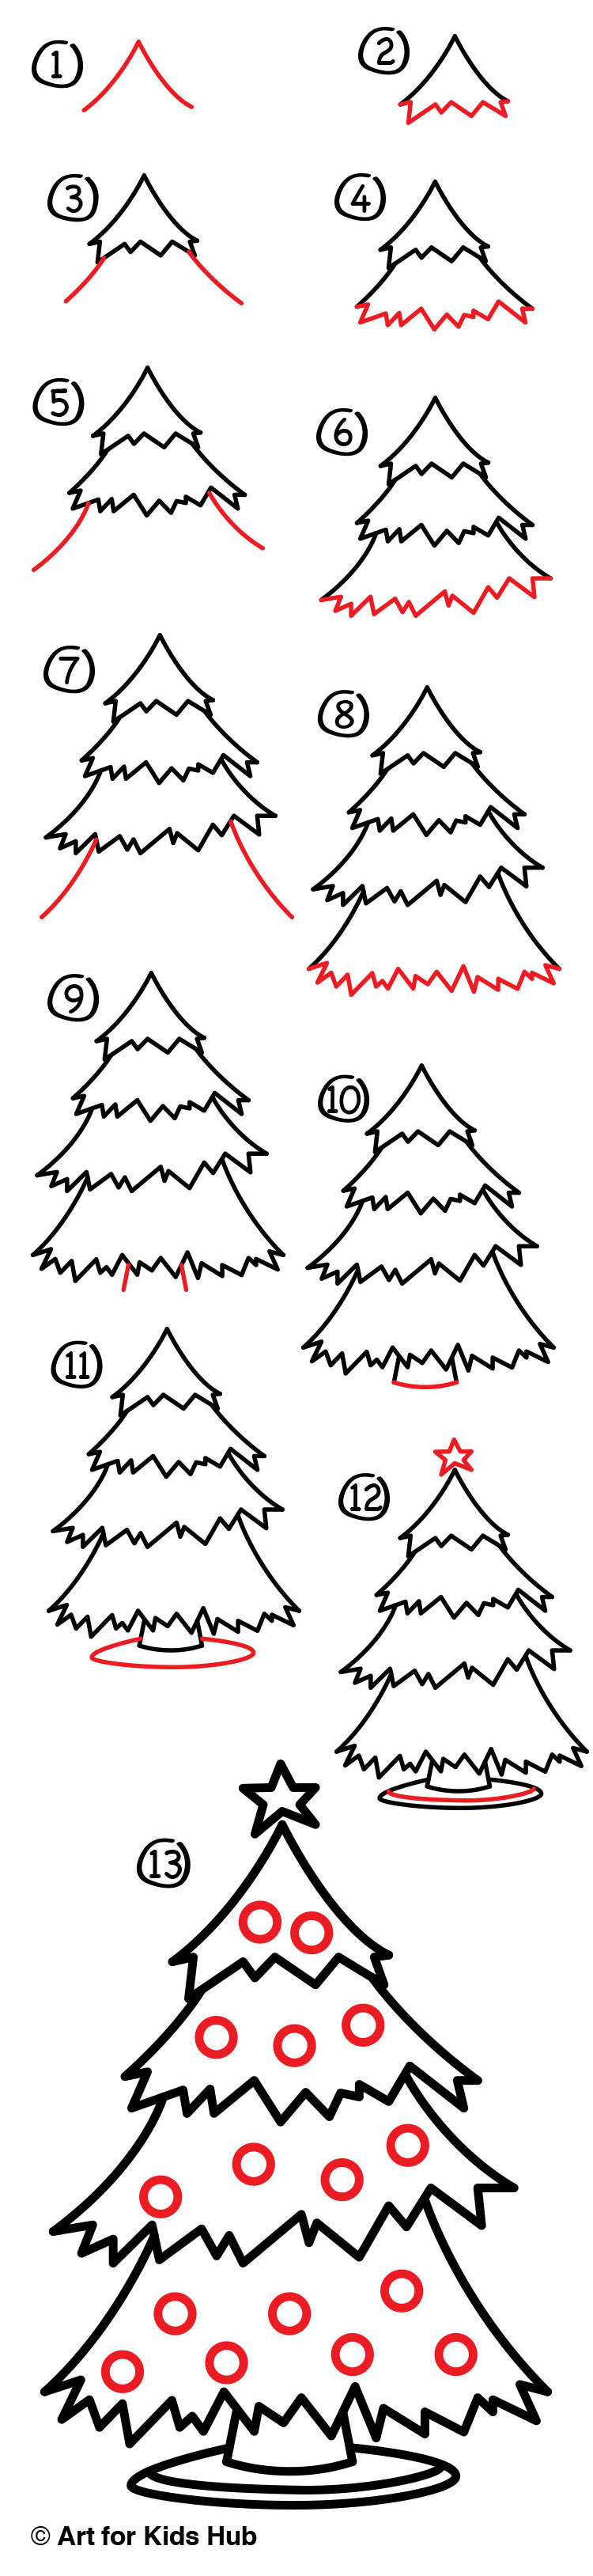 how-to-draw-a-christmas-tree-art-for-kids-hub